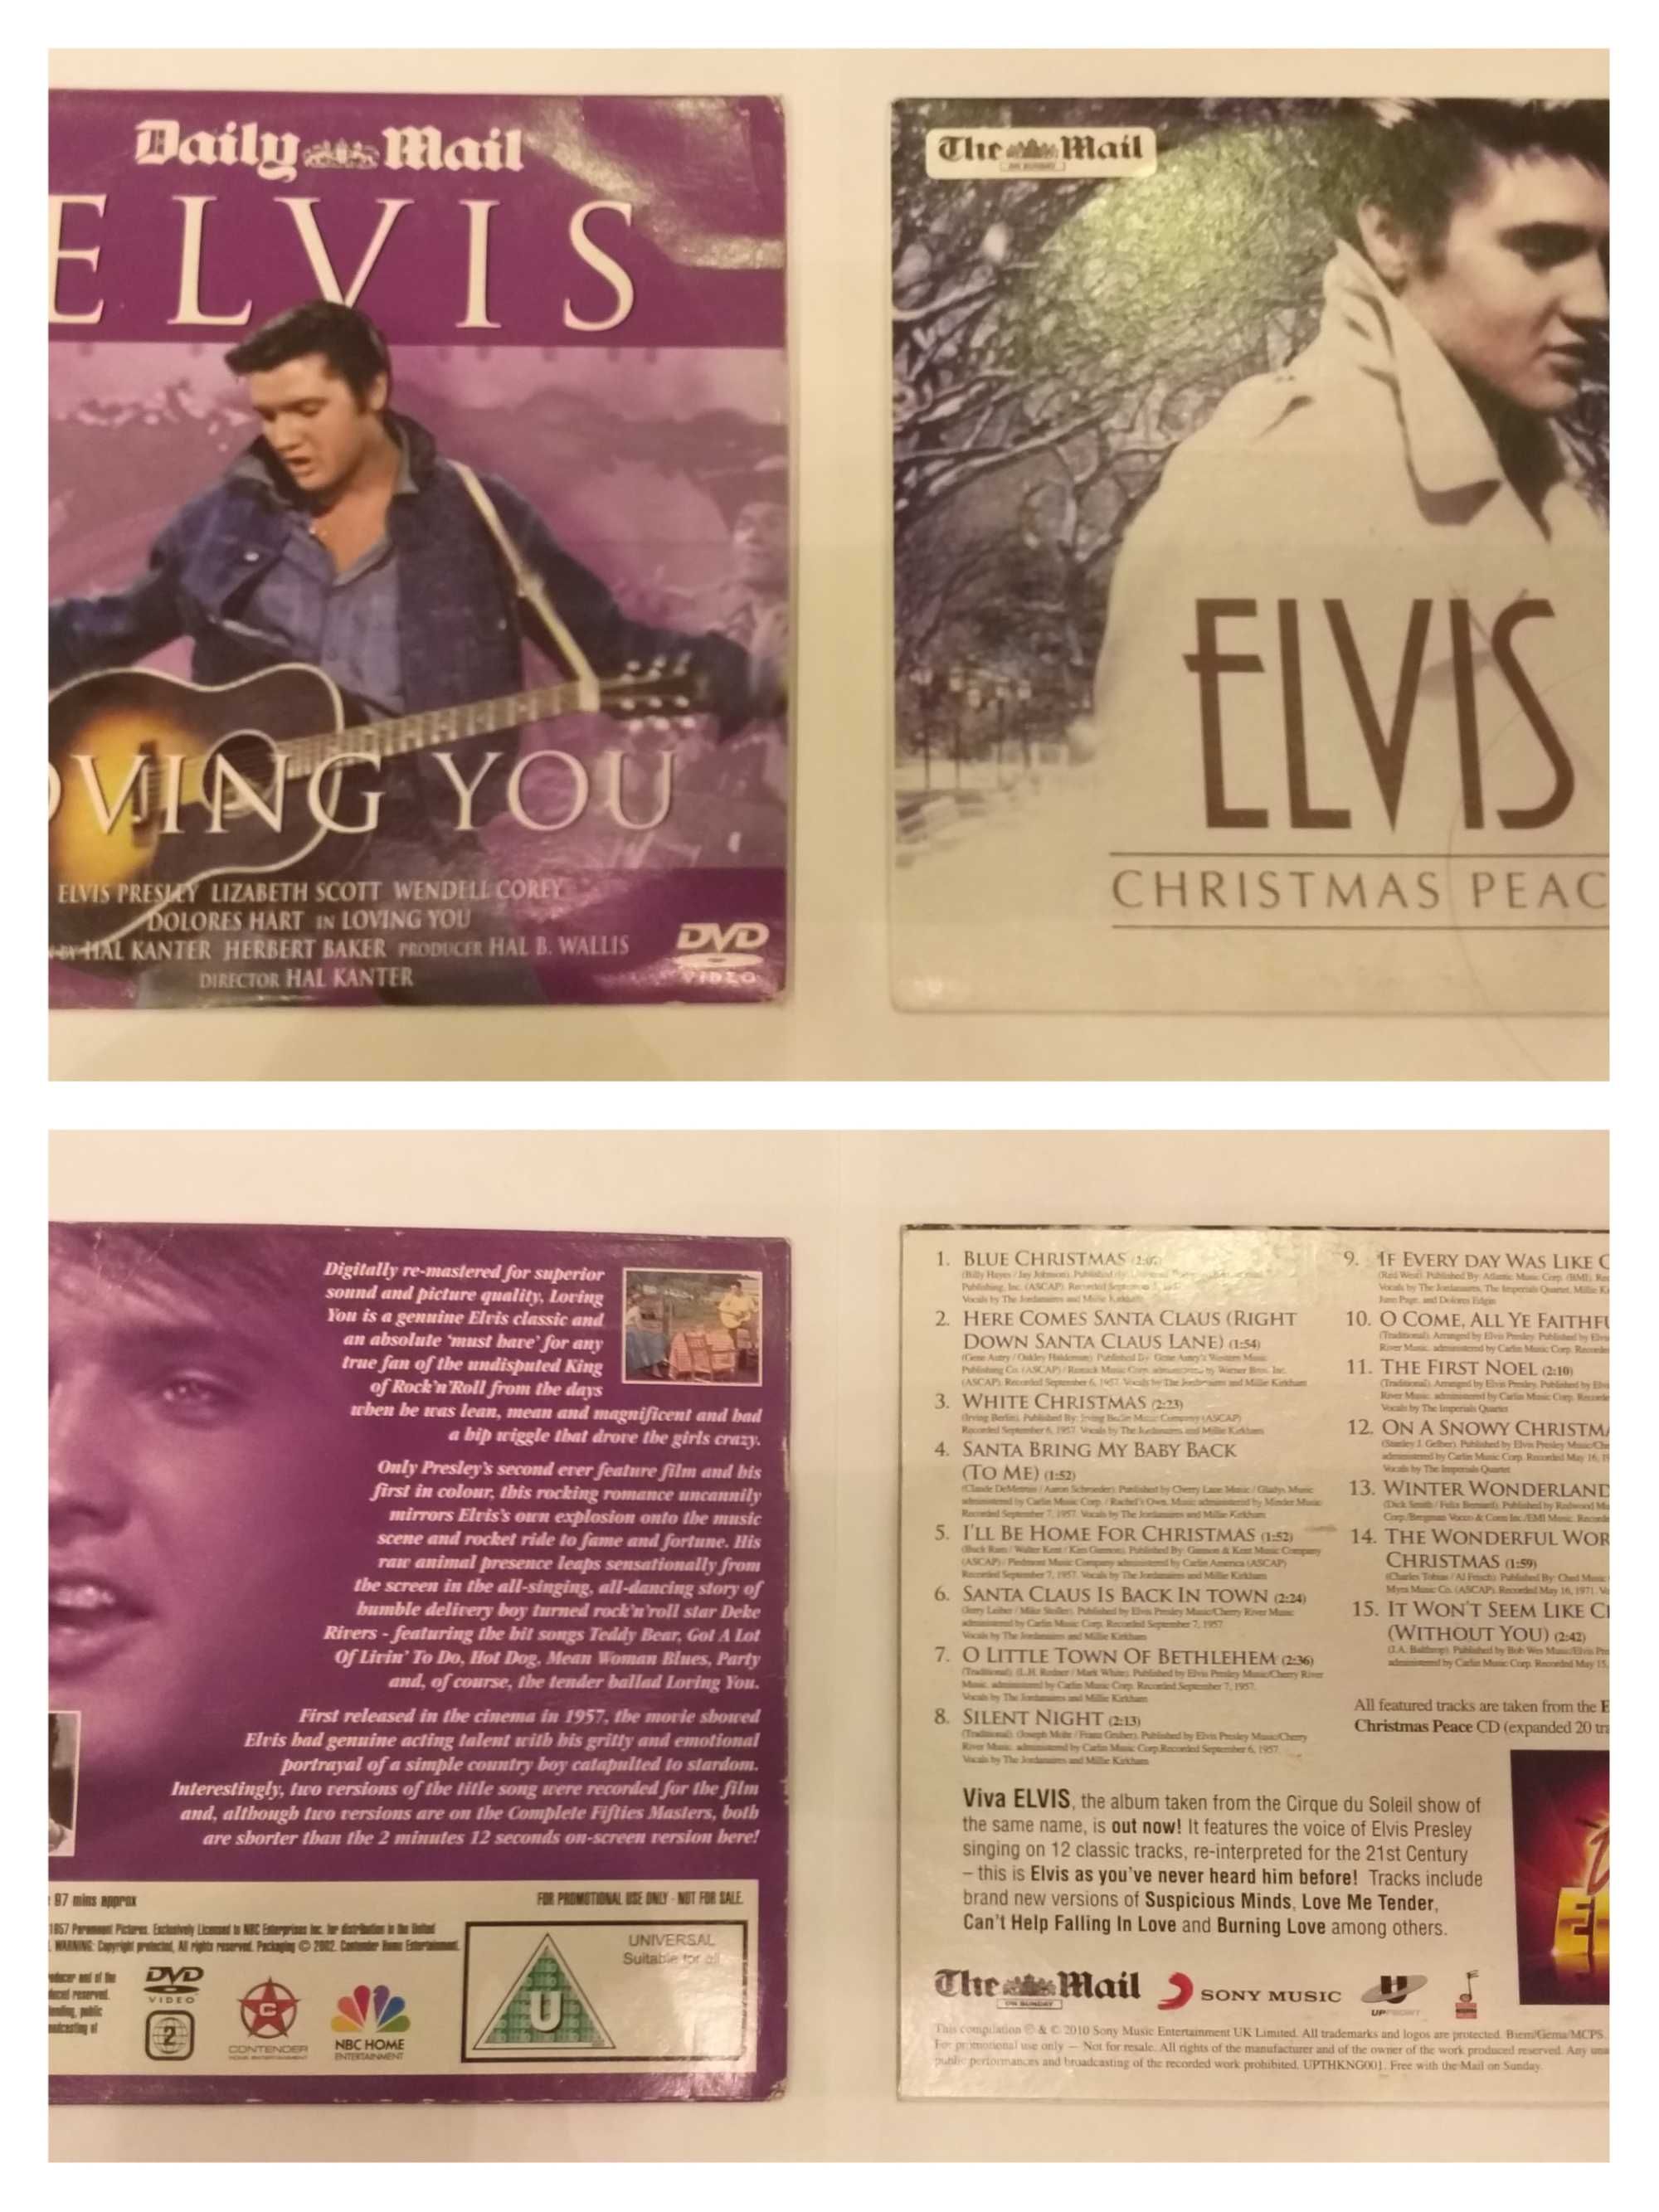 29 сд cd дисков Elvis Presley Christmas hit Lenny Kravitz Mozart и др)